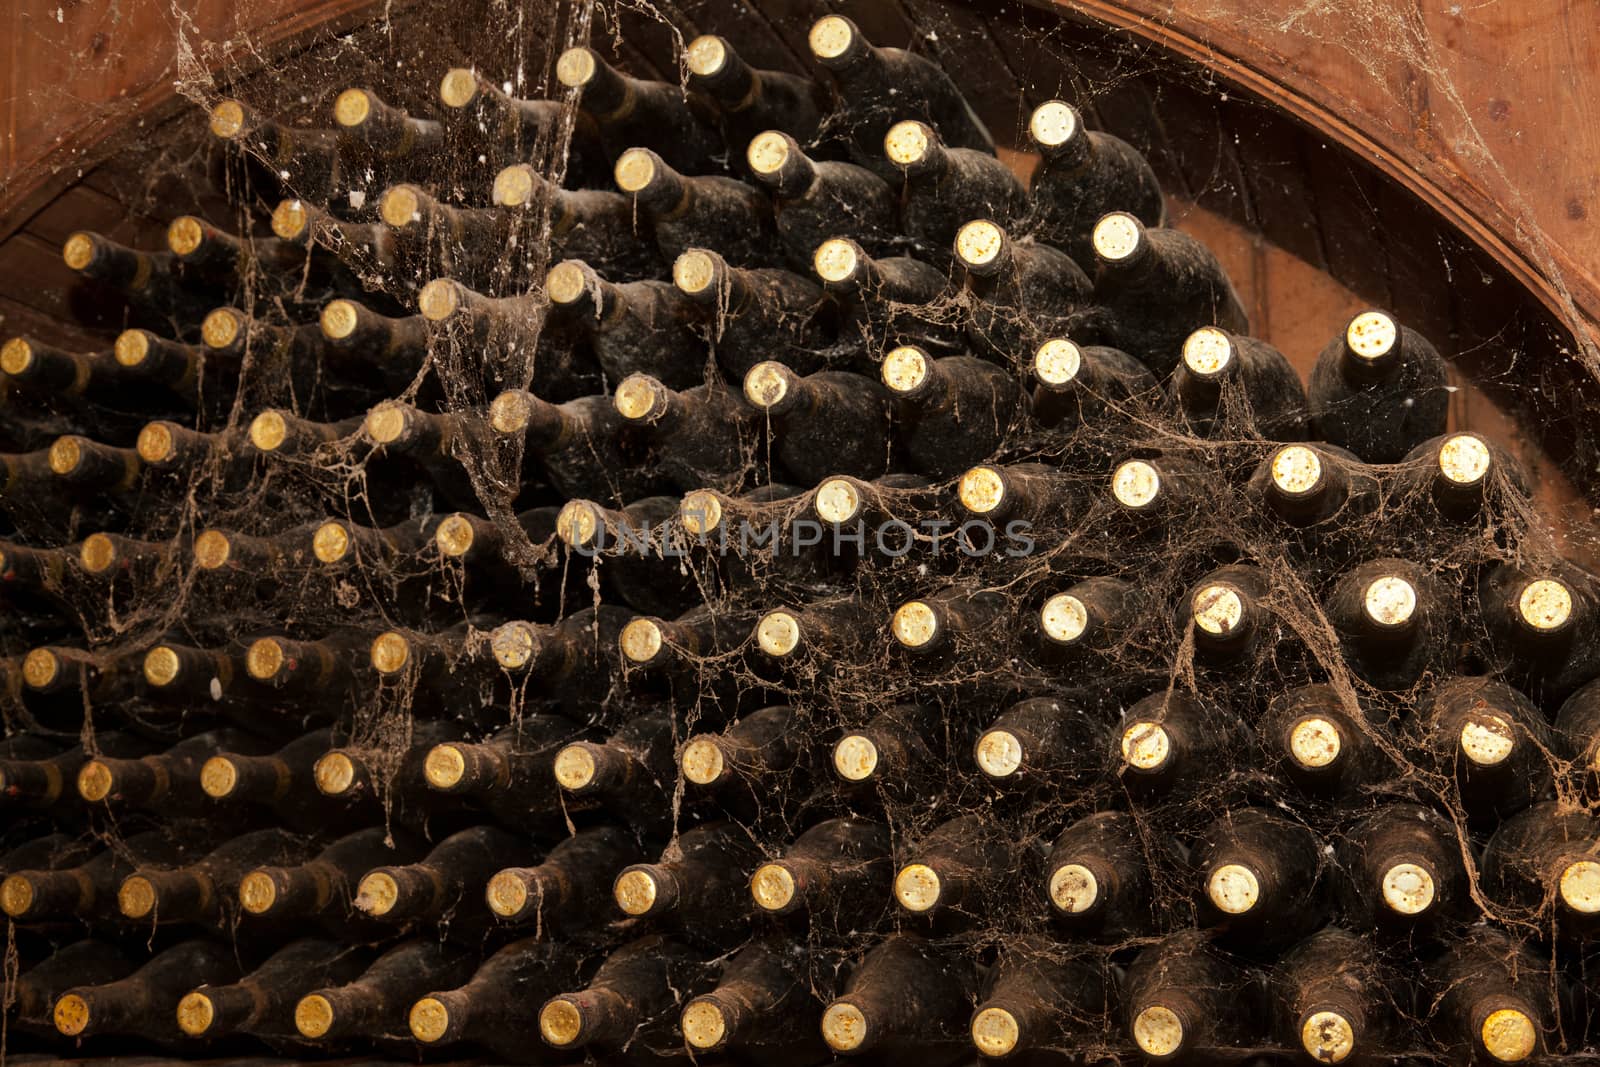 Old bottles of wine in rows in wine cellar.